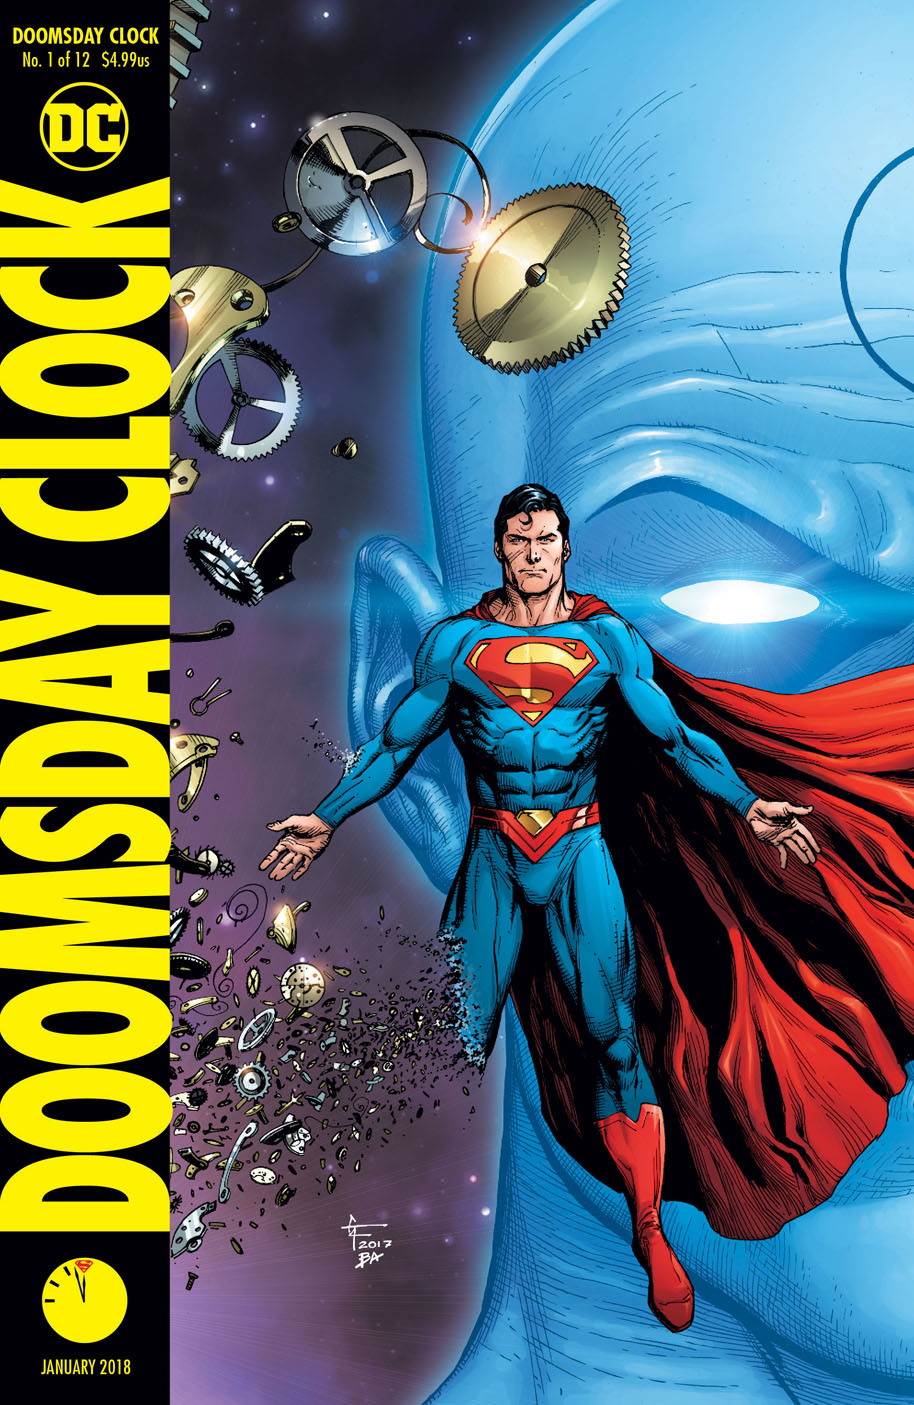 76 -  [DC COMICS] Publicaciones Universo DC: Discusión General v2 - Página 10 Variant-cover-of-doomsday-clock-1-with-superman-and-doctor-manhattan